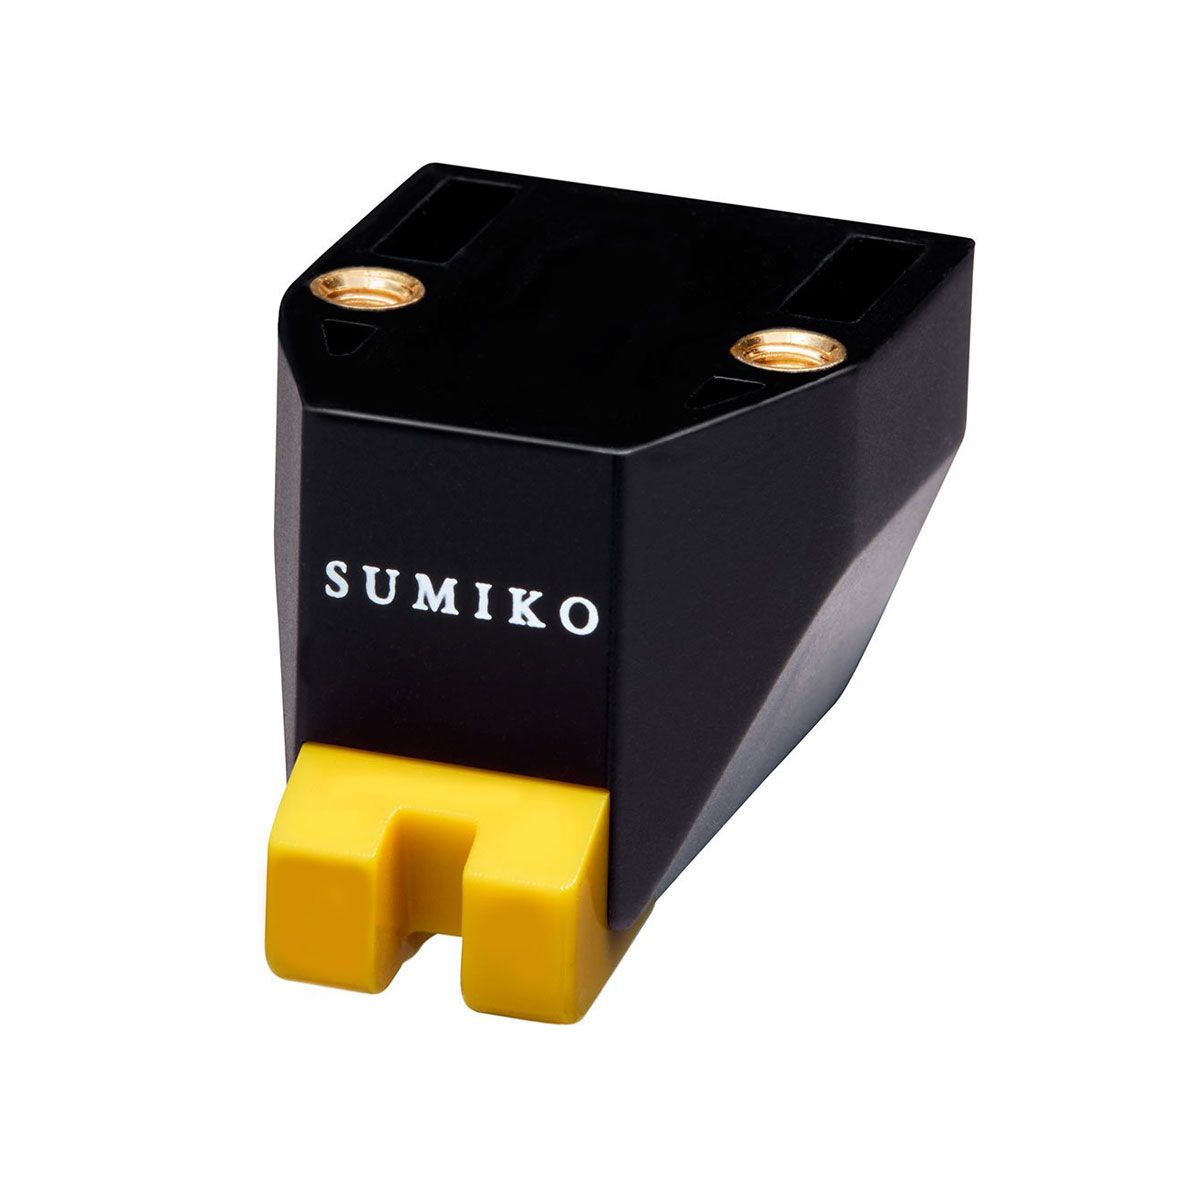 Sumiko RS78 78rpm Stylus, installed on Sumiko phono cartridge